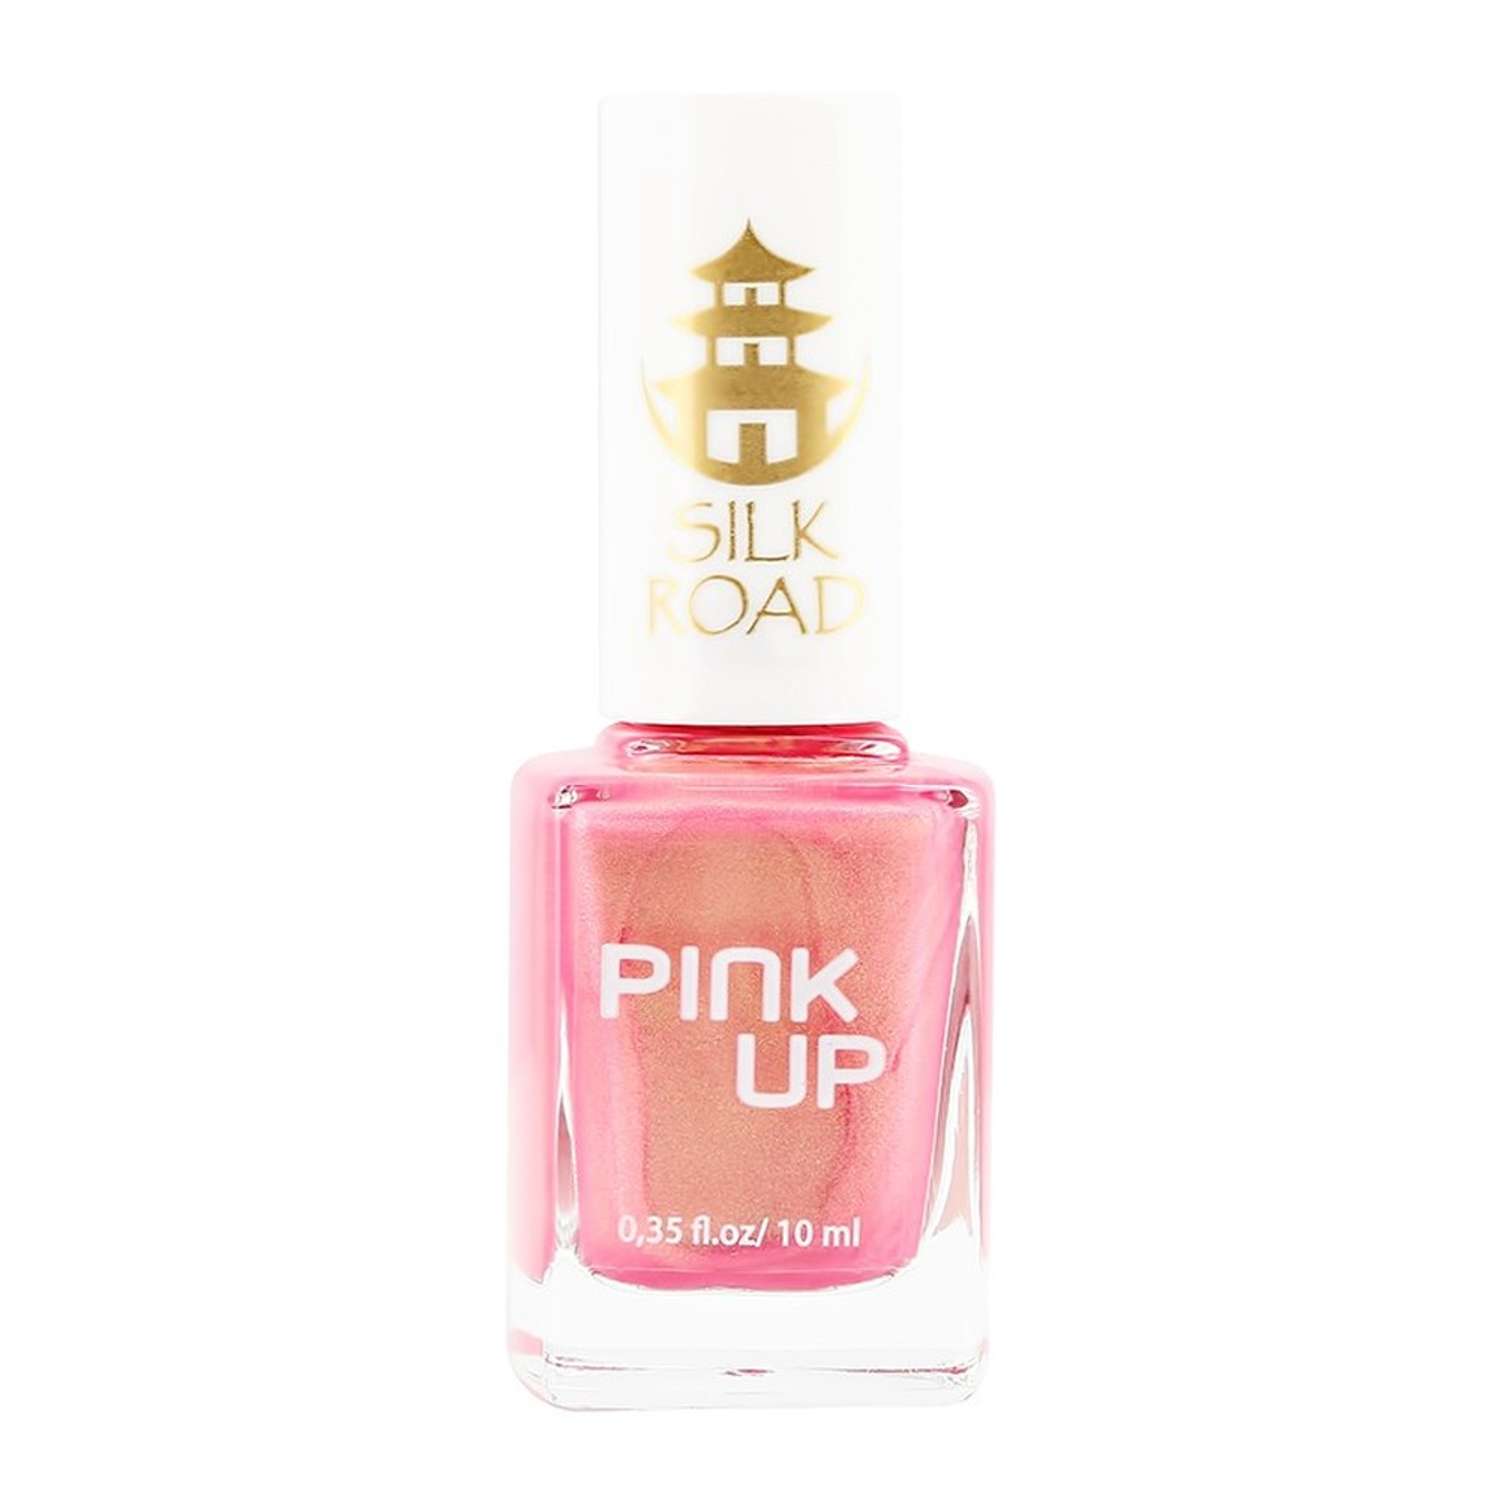 Лак для ногтей Pink Up Limited silk road тон 05 10 мл - фото 3